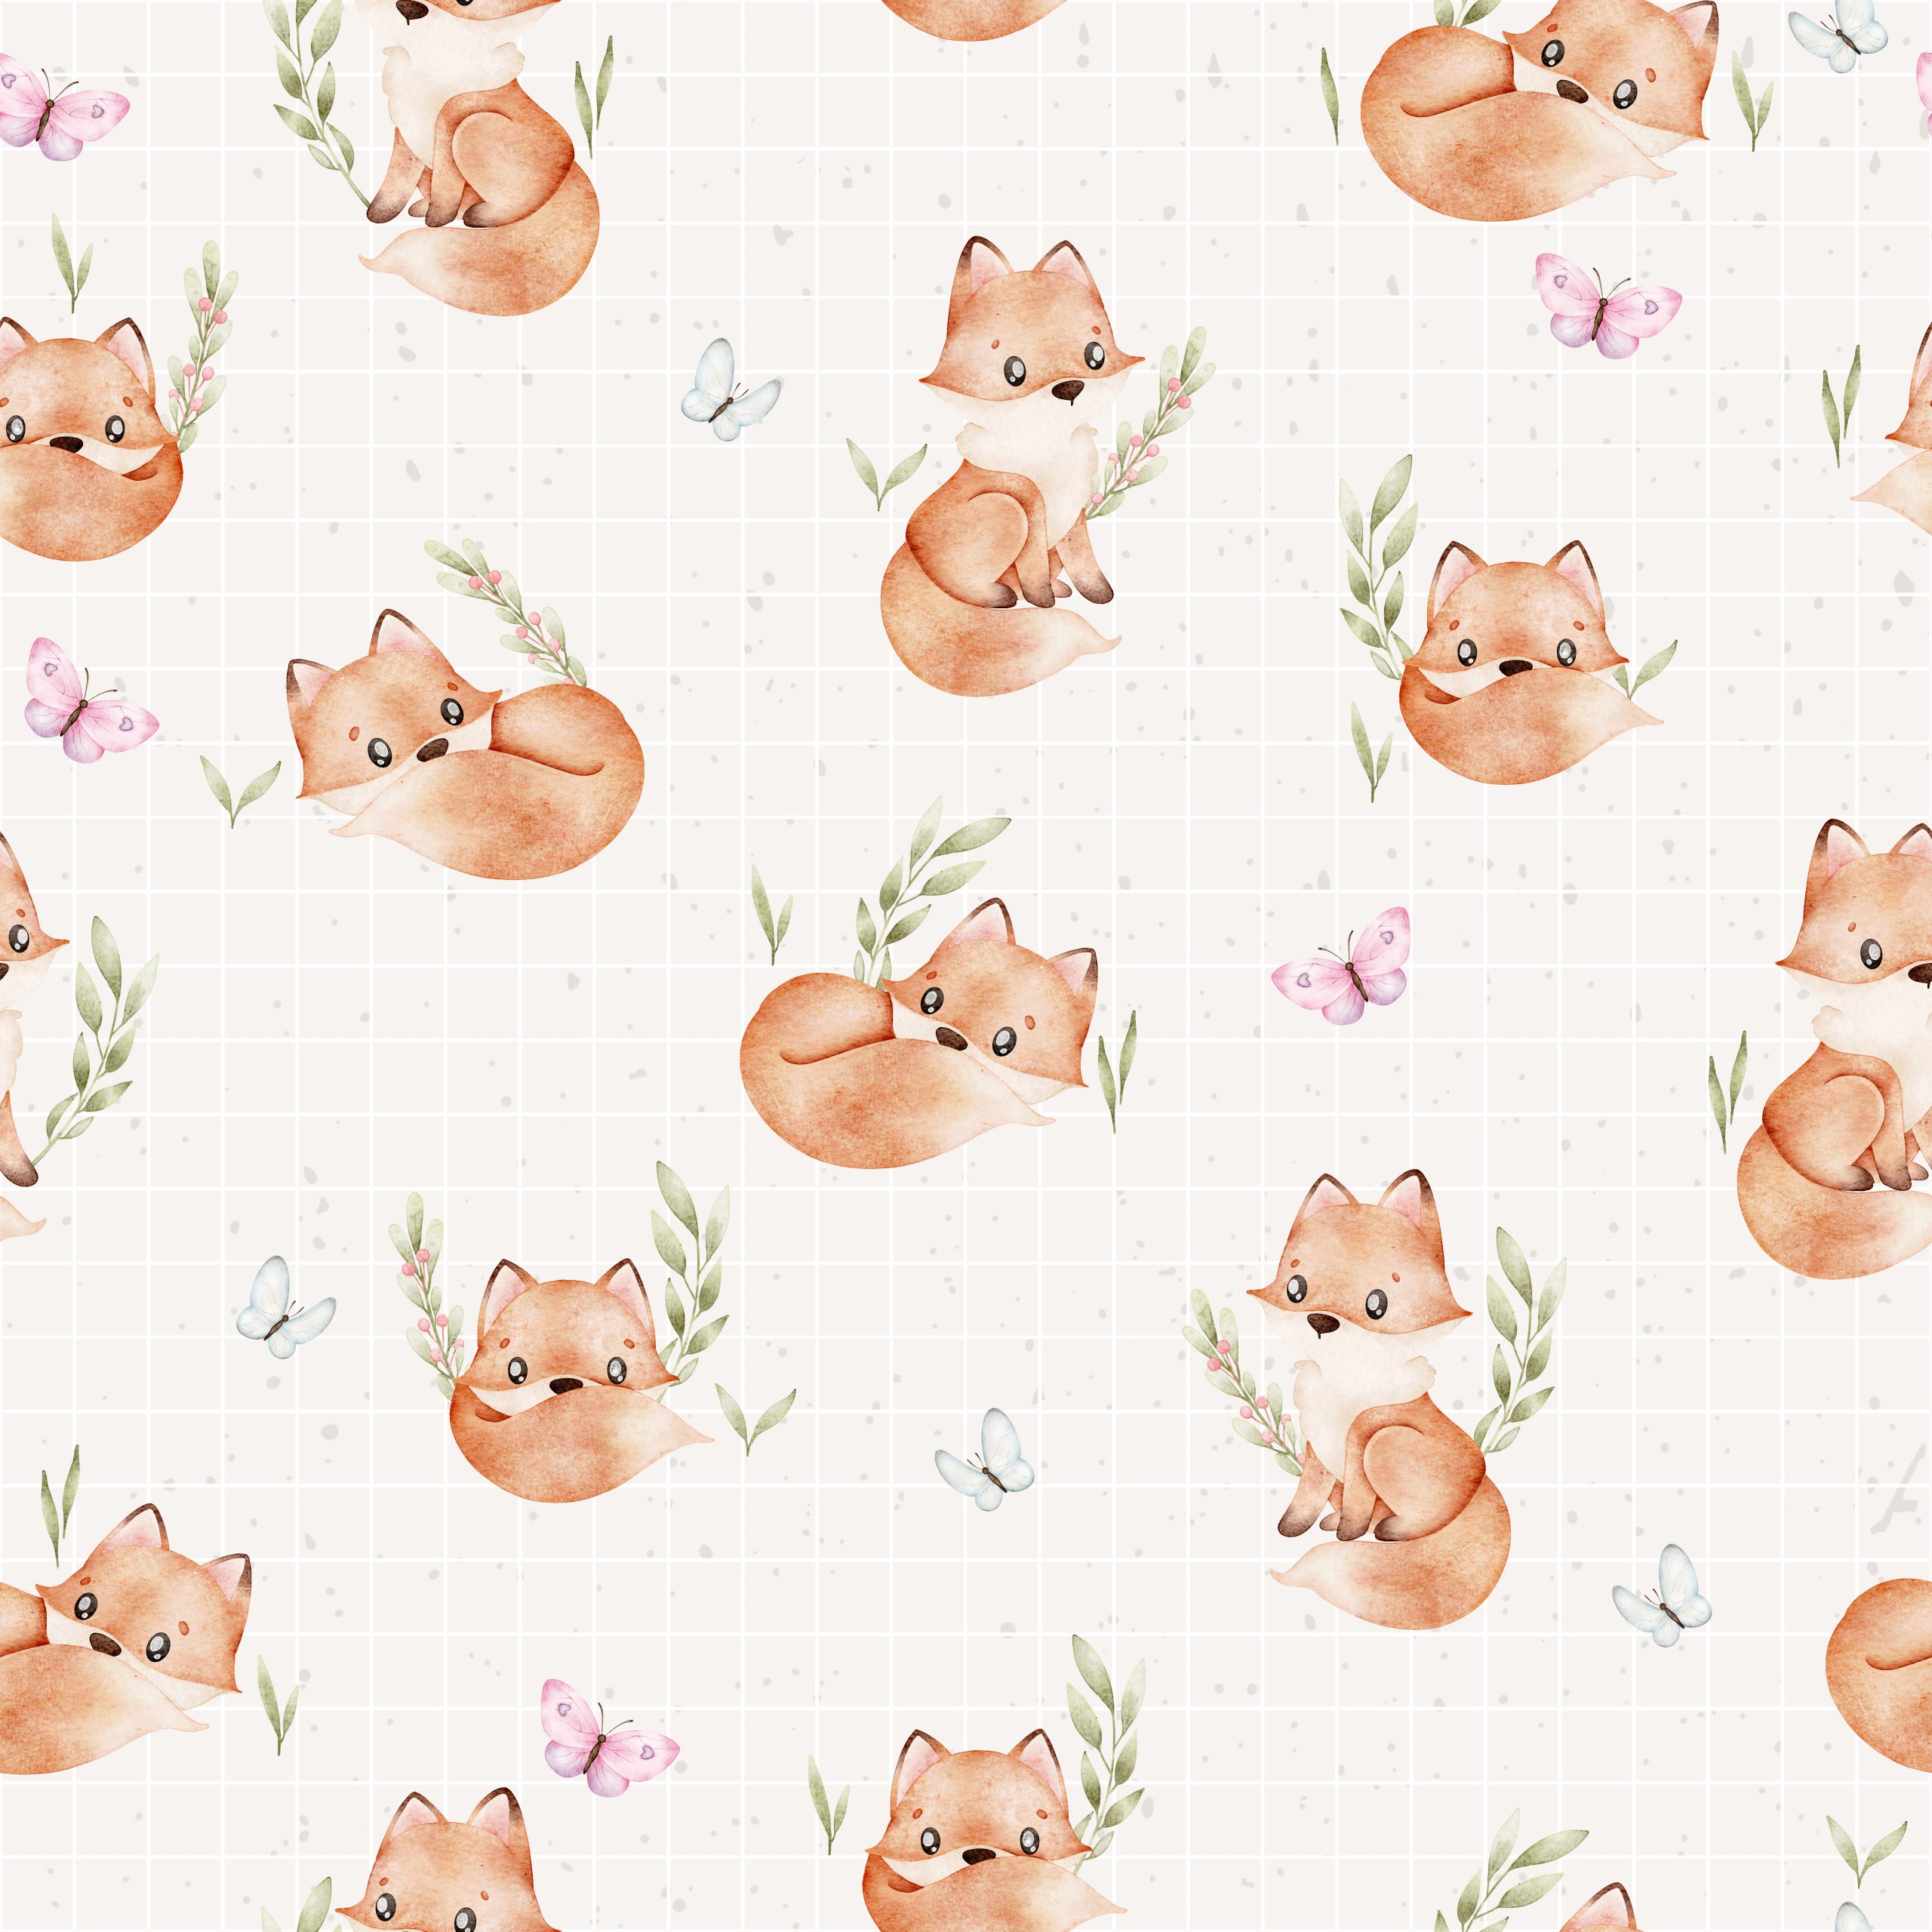 Little-cute-foxes